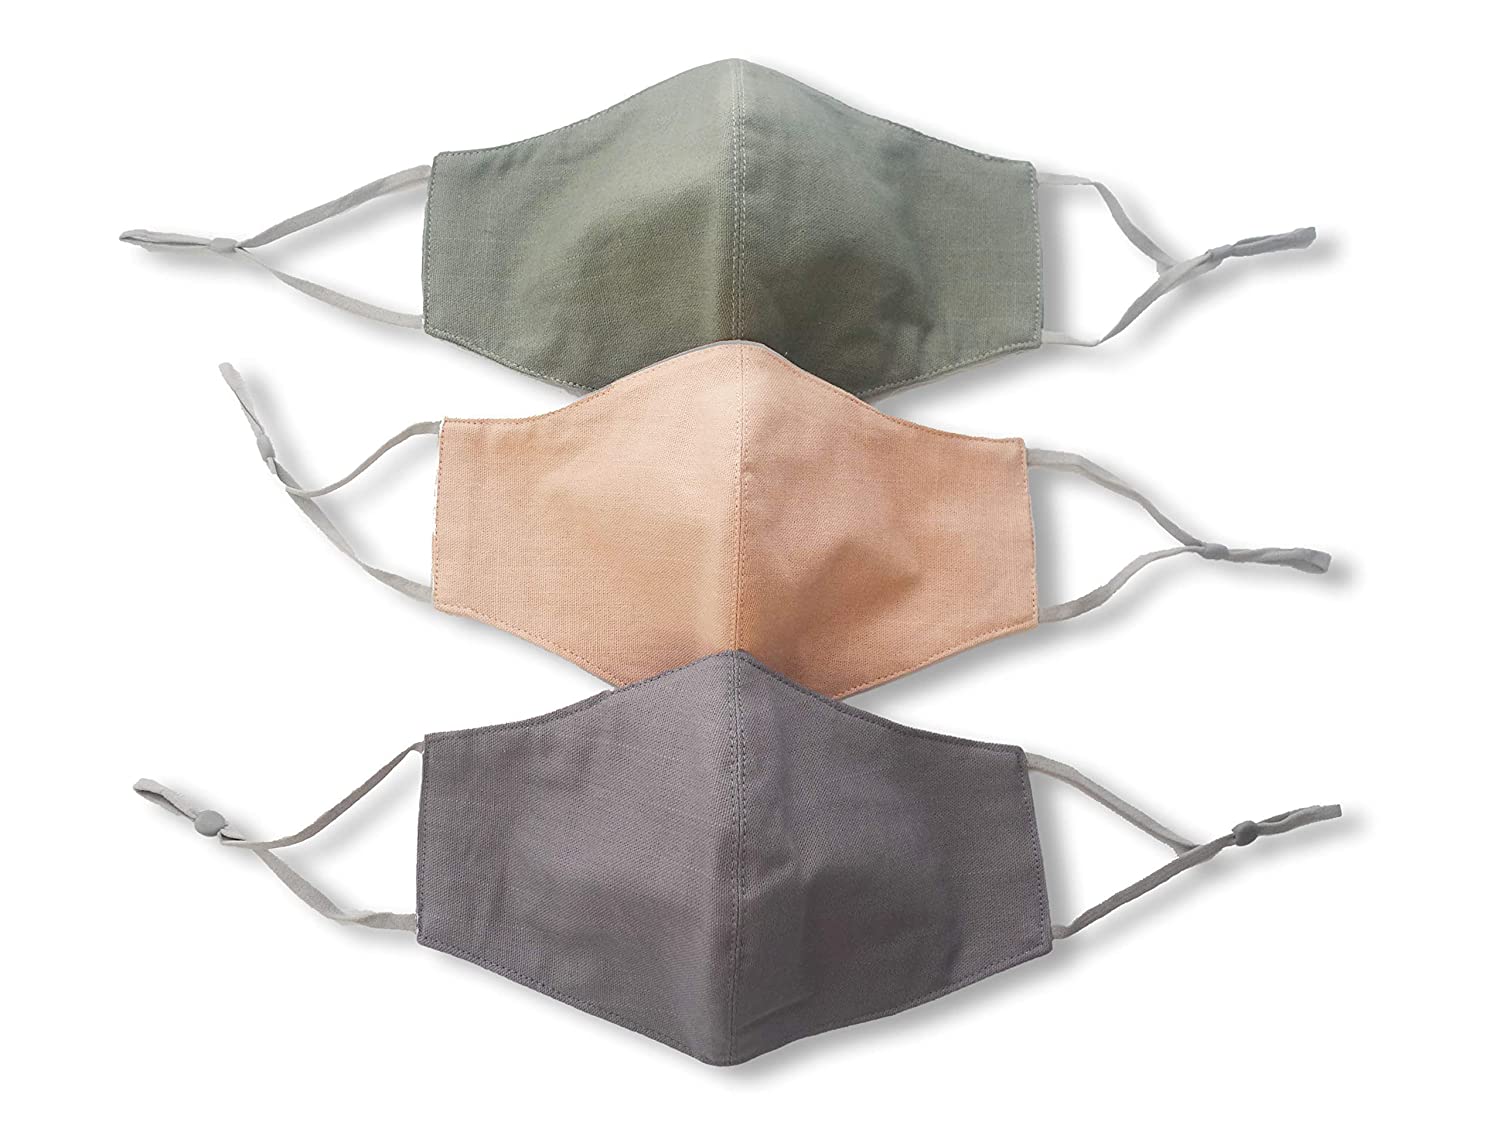 10 Best Handmade COVID Face Masks Keep Safe from the Coronavirus